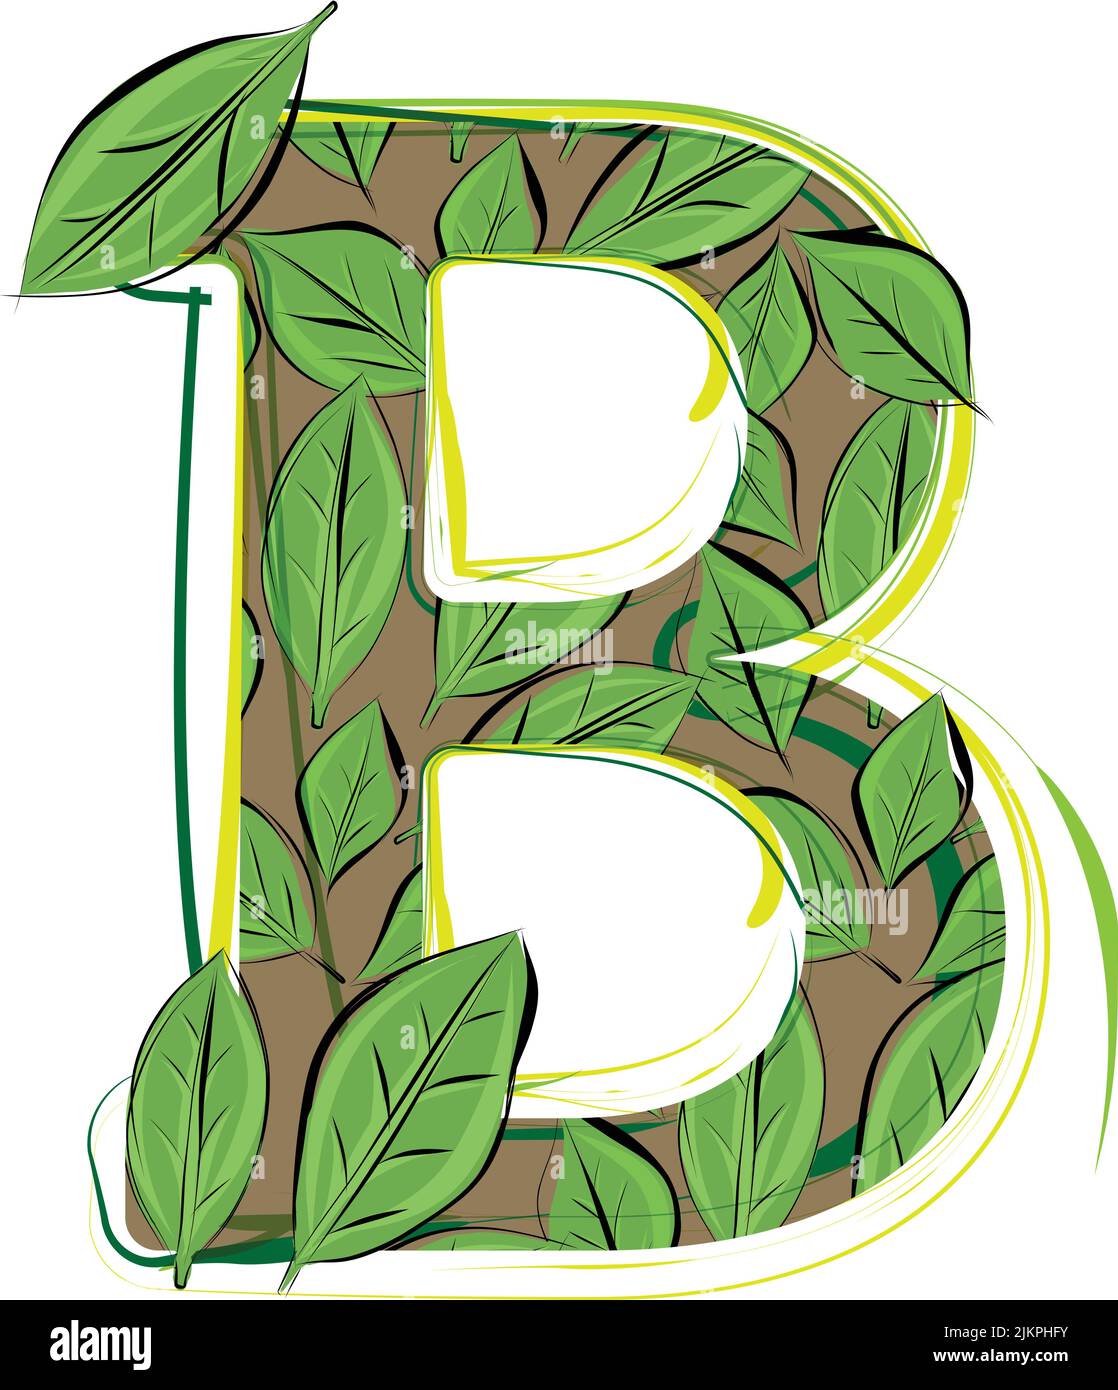 https://c8.alamy.com/comp/2JKPHFY/green-leaf-alphabet-vector-illustration-letter-b-2JKPHFY.jpg